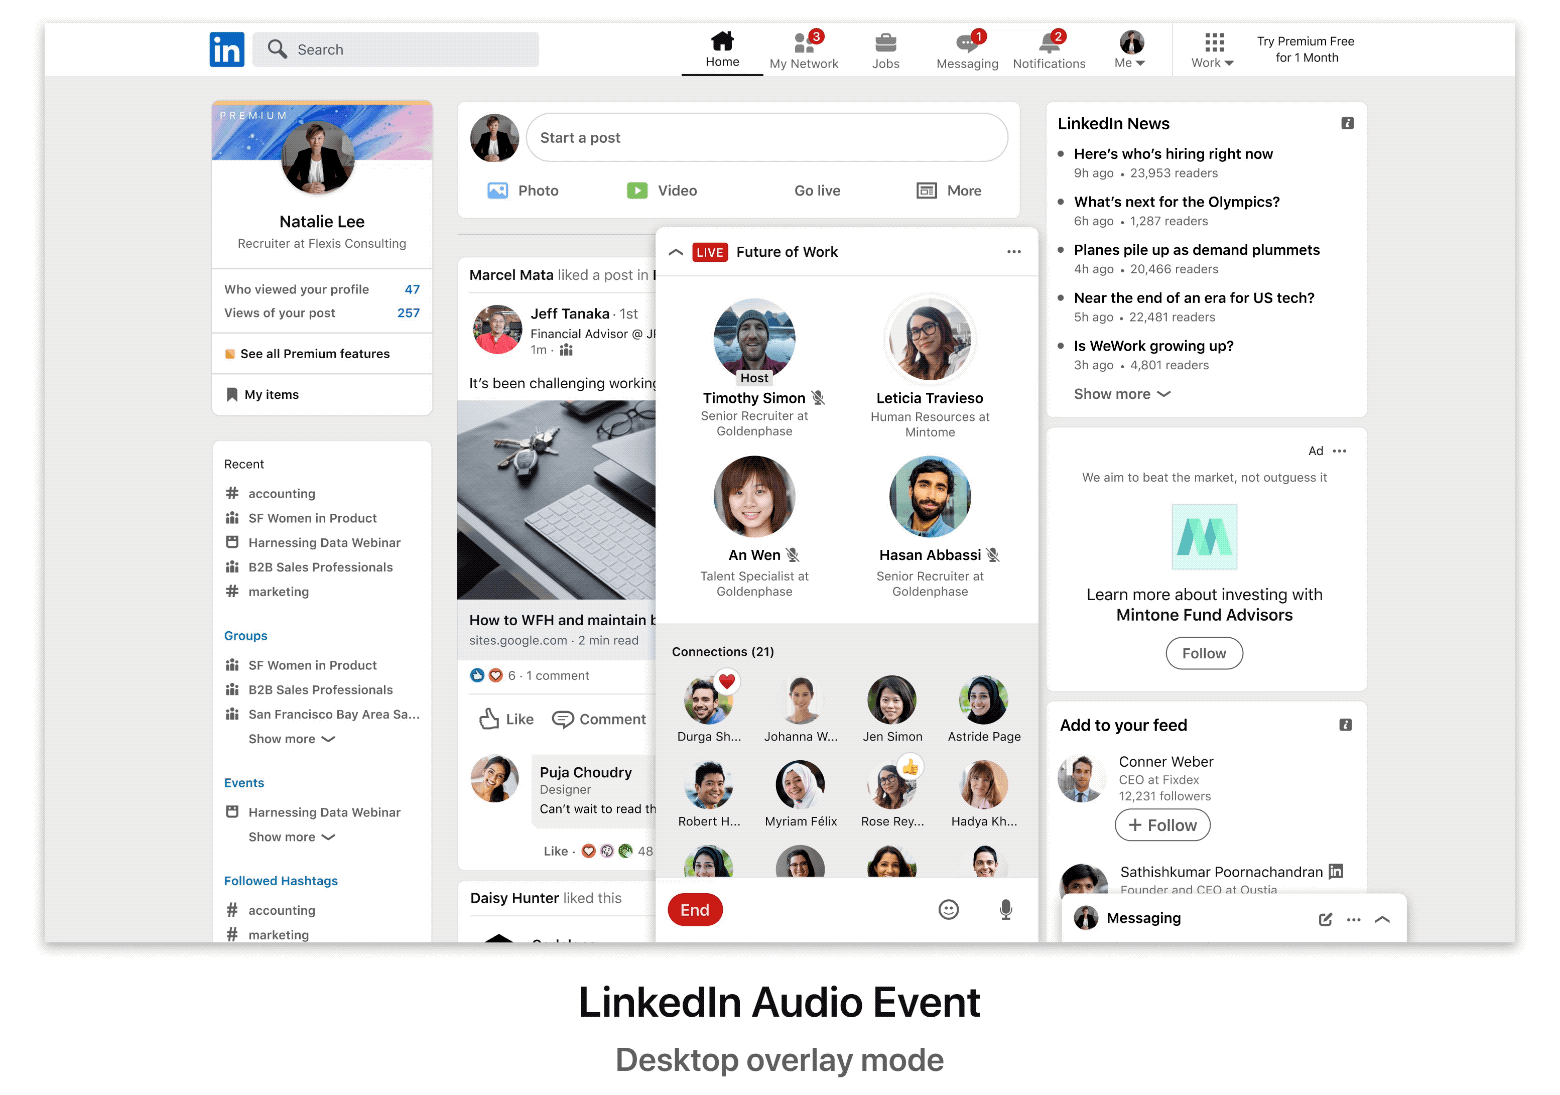 LinkedIn Social Audio Platform Debuts, Video Version Coming Soon